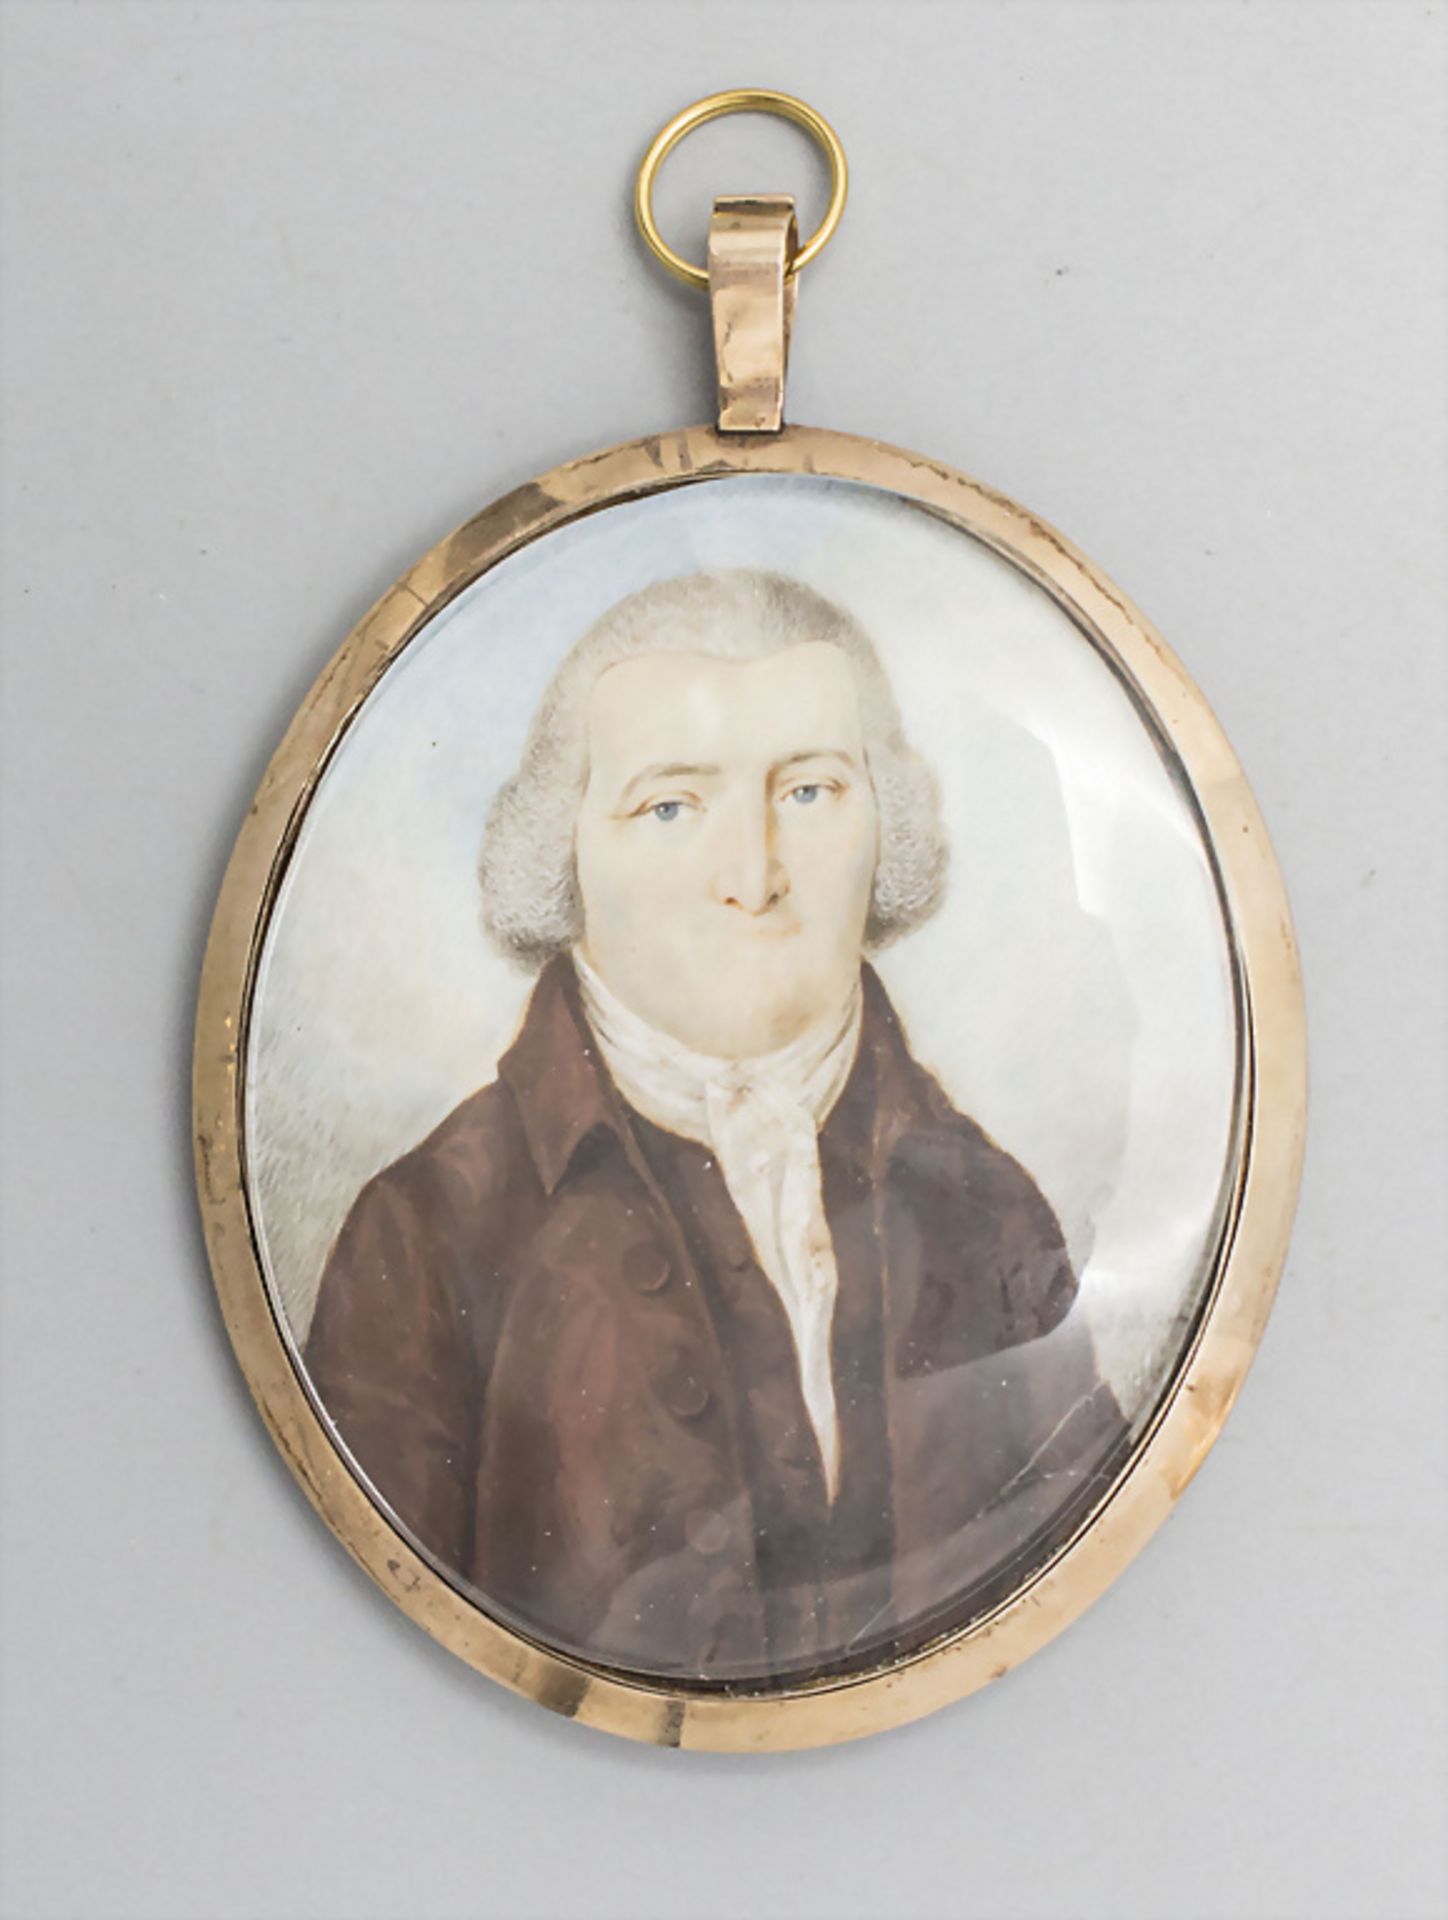 Memorabilia Medaillon / A memorabilia medallion, England, um 1830